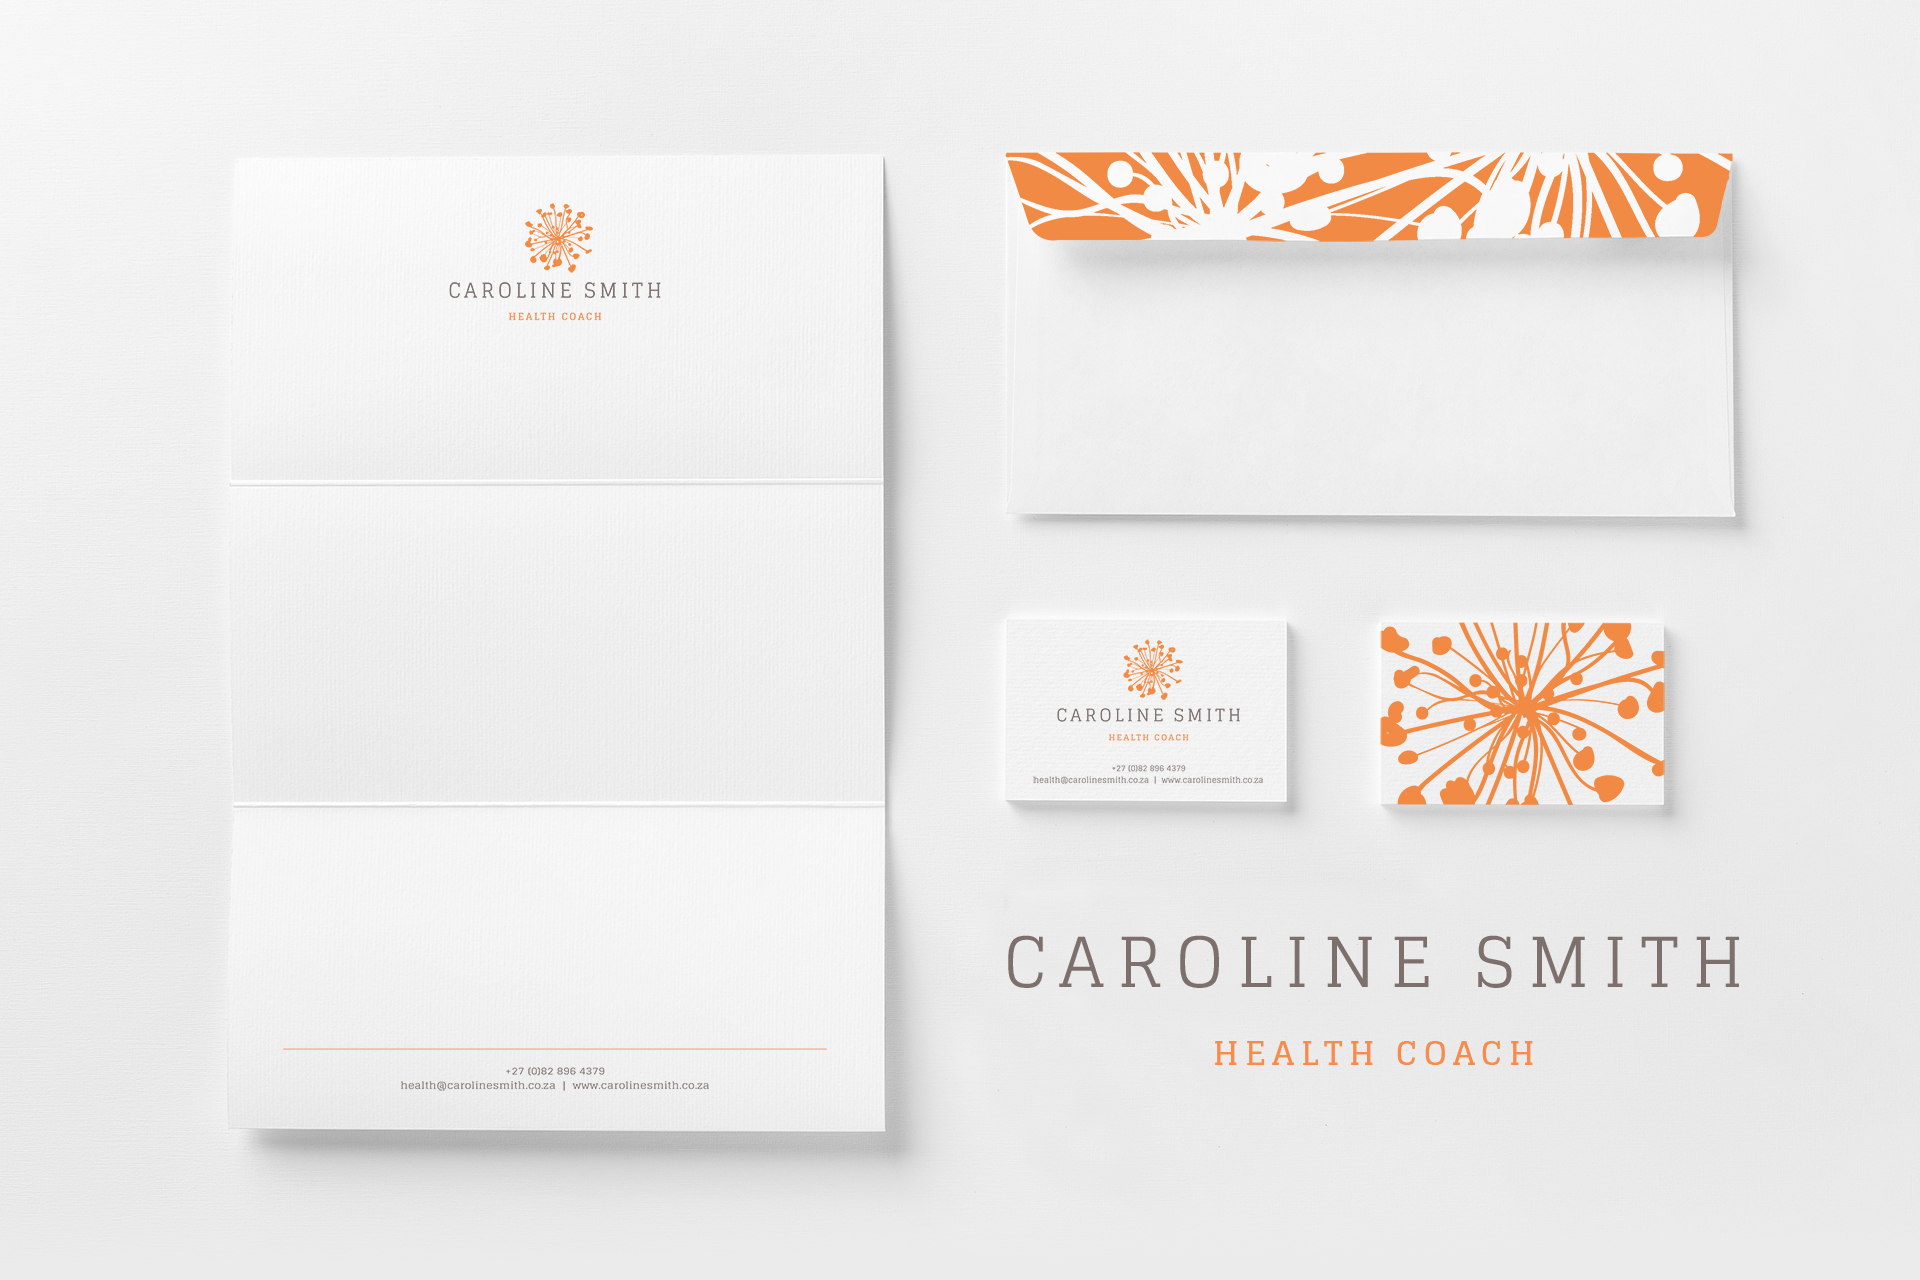 Caroline Smith Health Coach stationery..